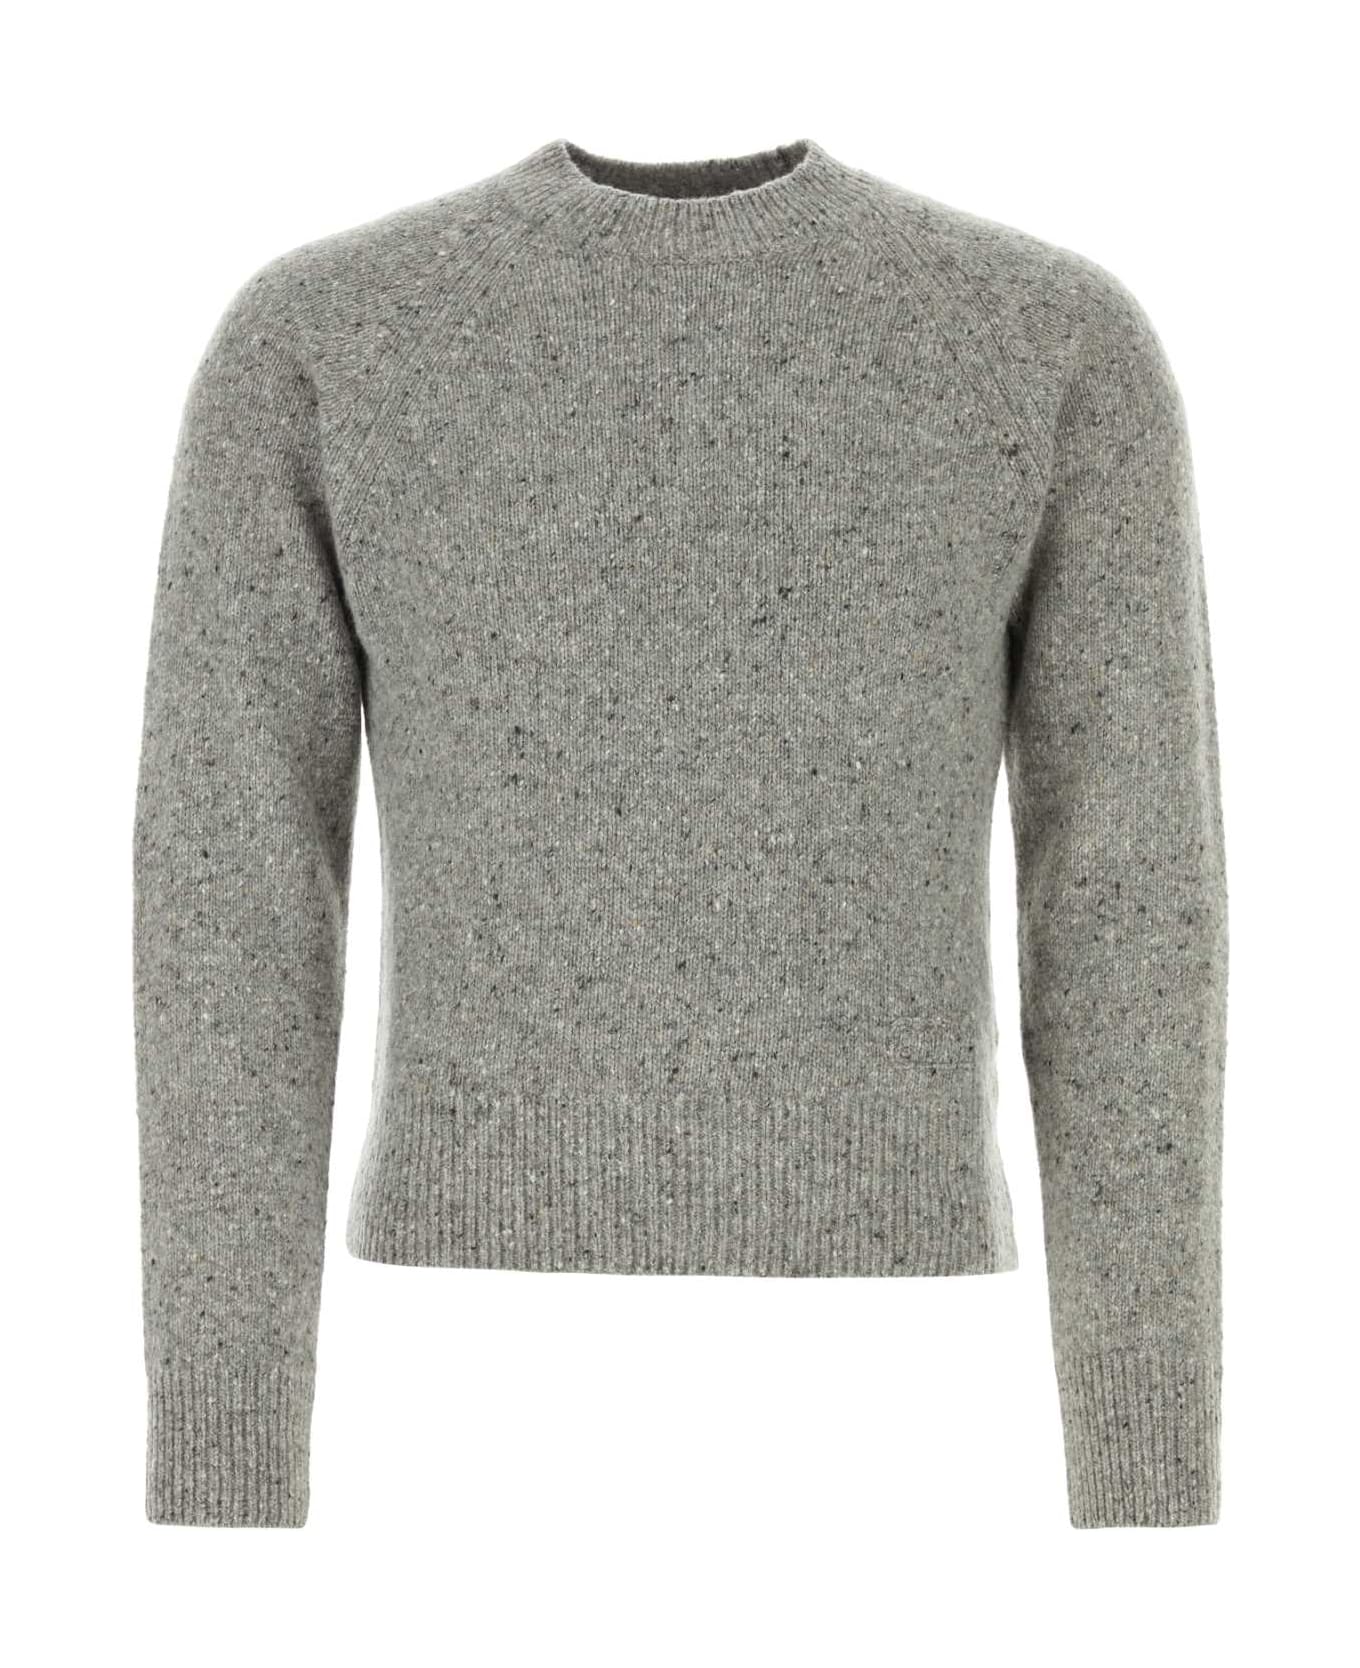 Ami Alexandre Mattiussi Melange Grey Wool Blend Sweater - LIGHTHEATHERGREY